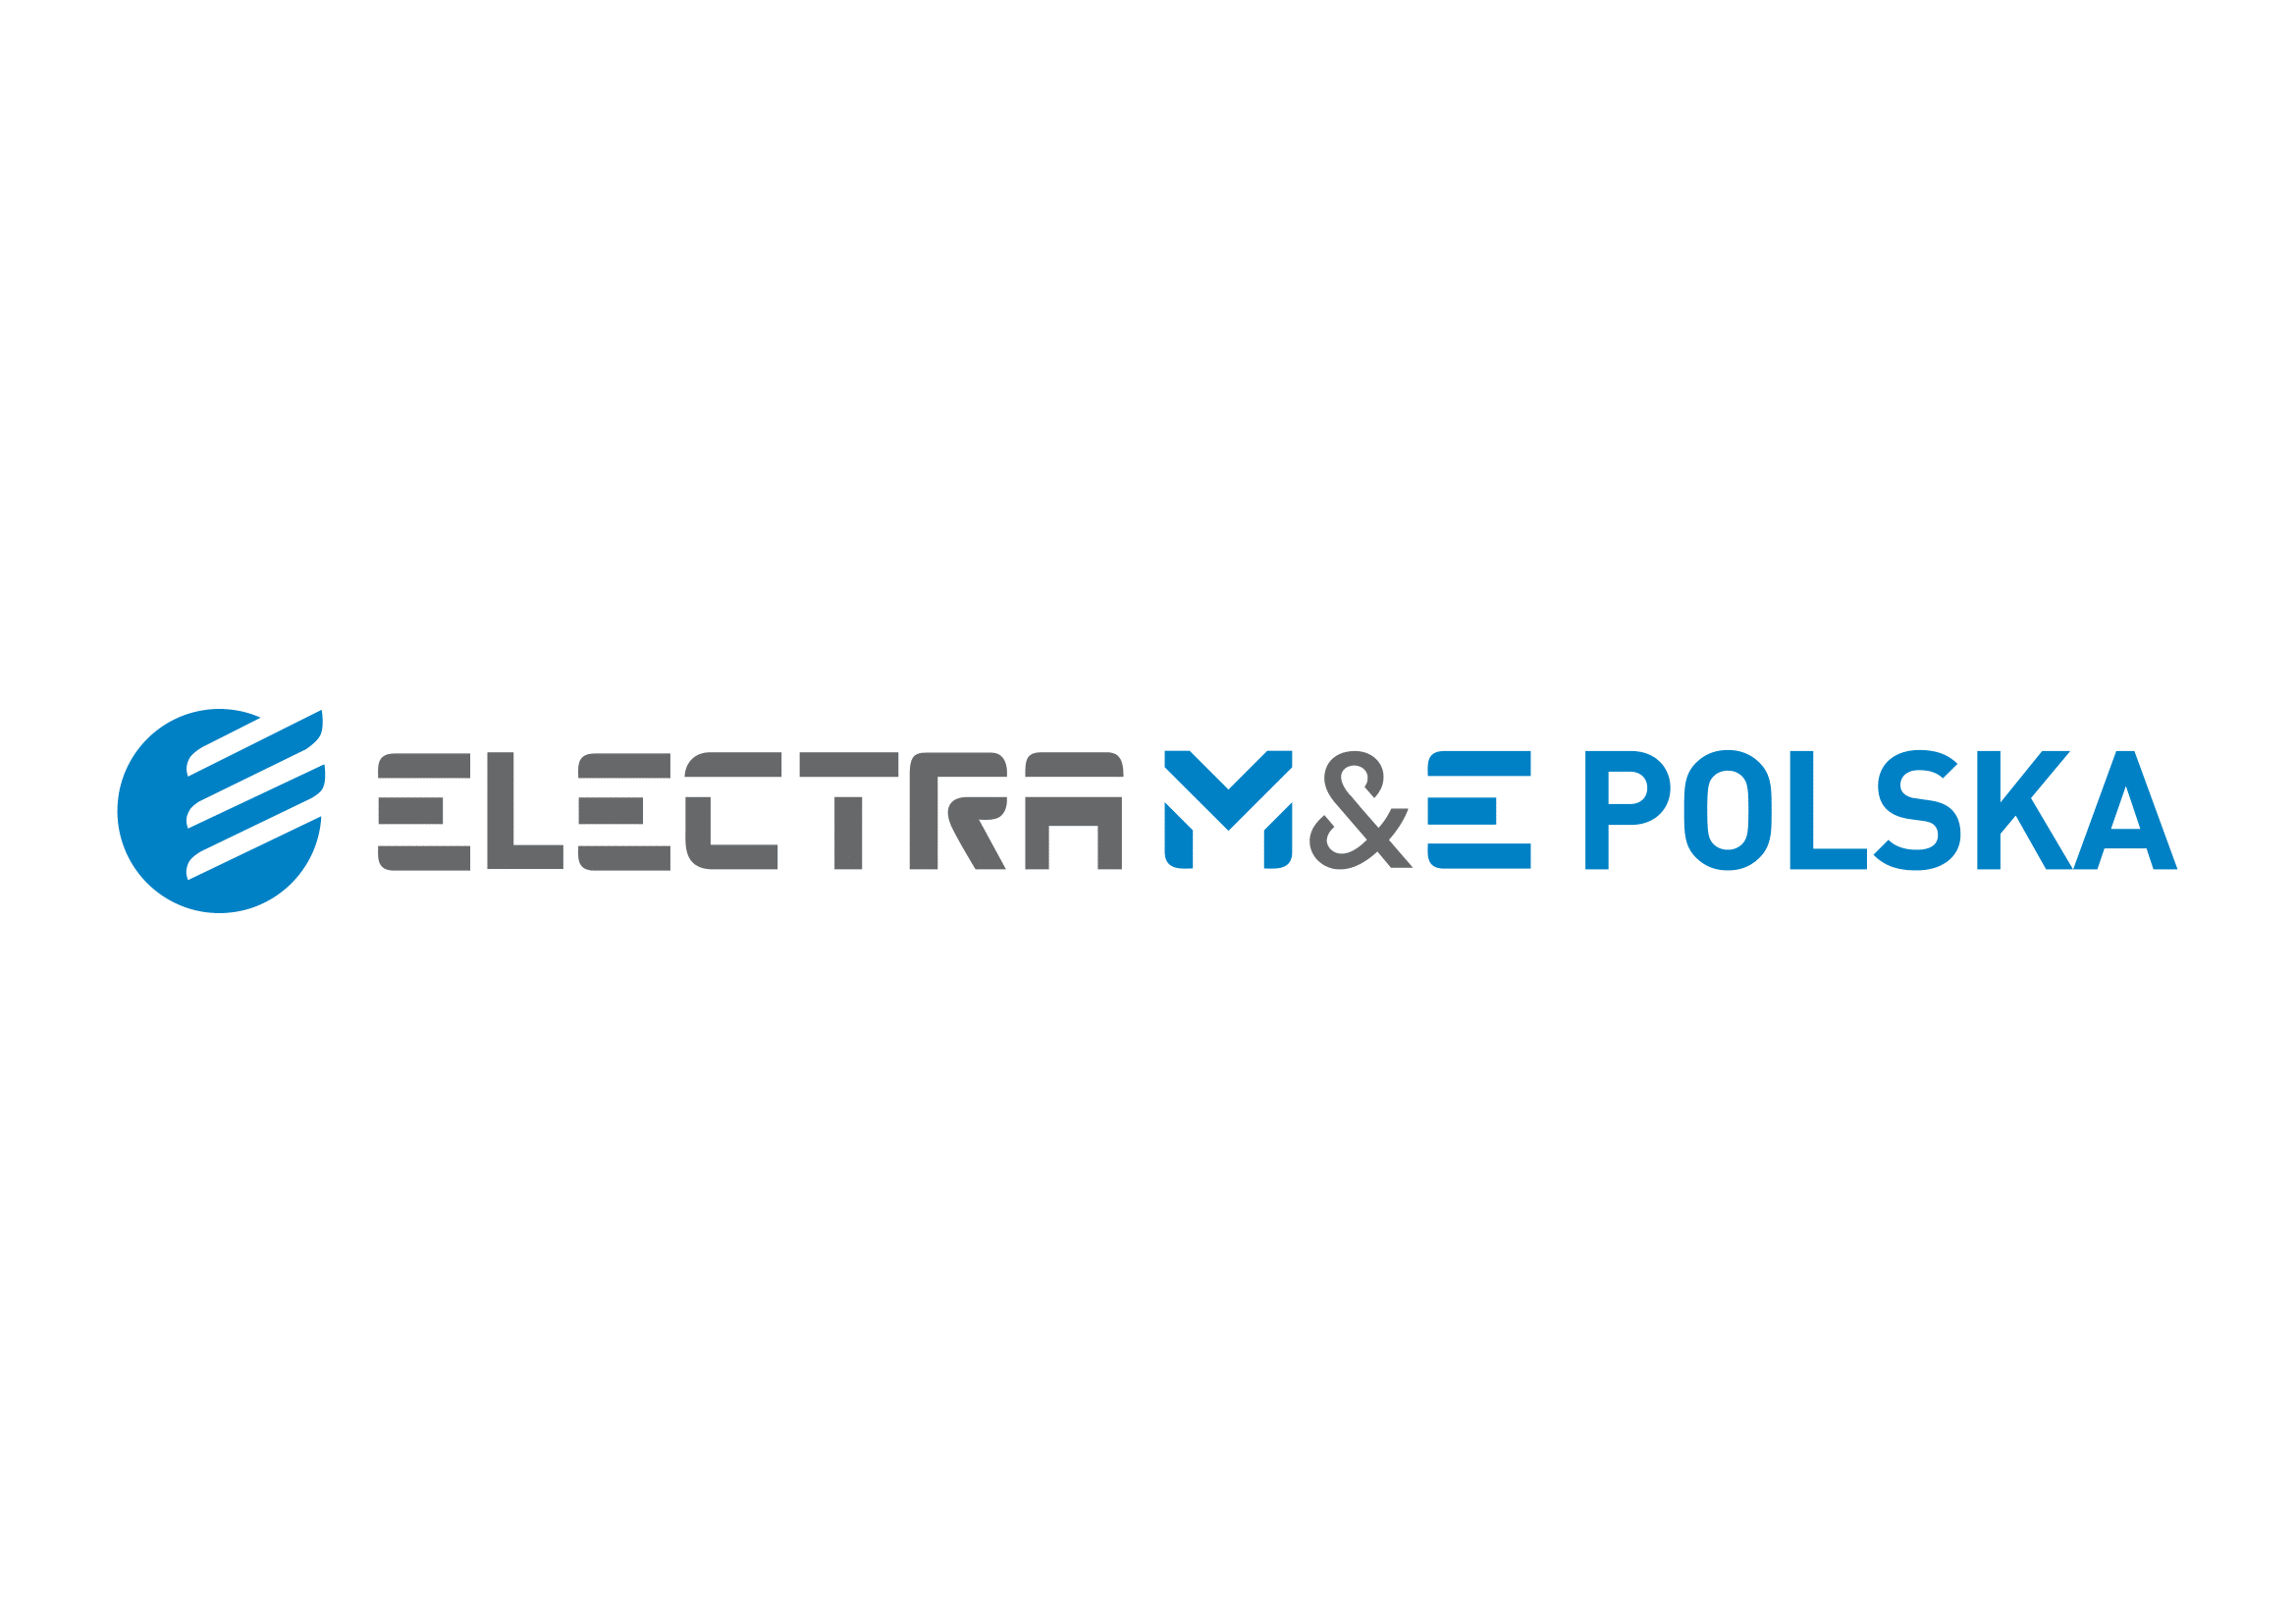 ELECTRA M&E POLSKA